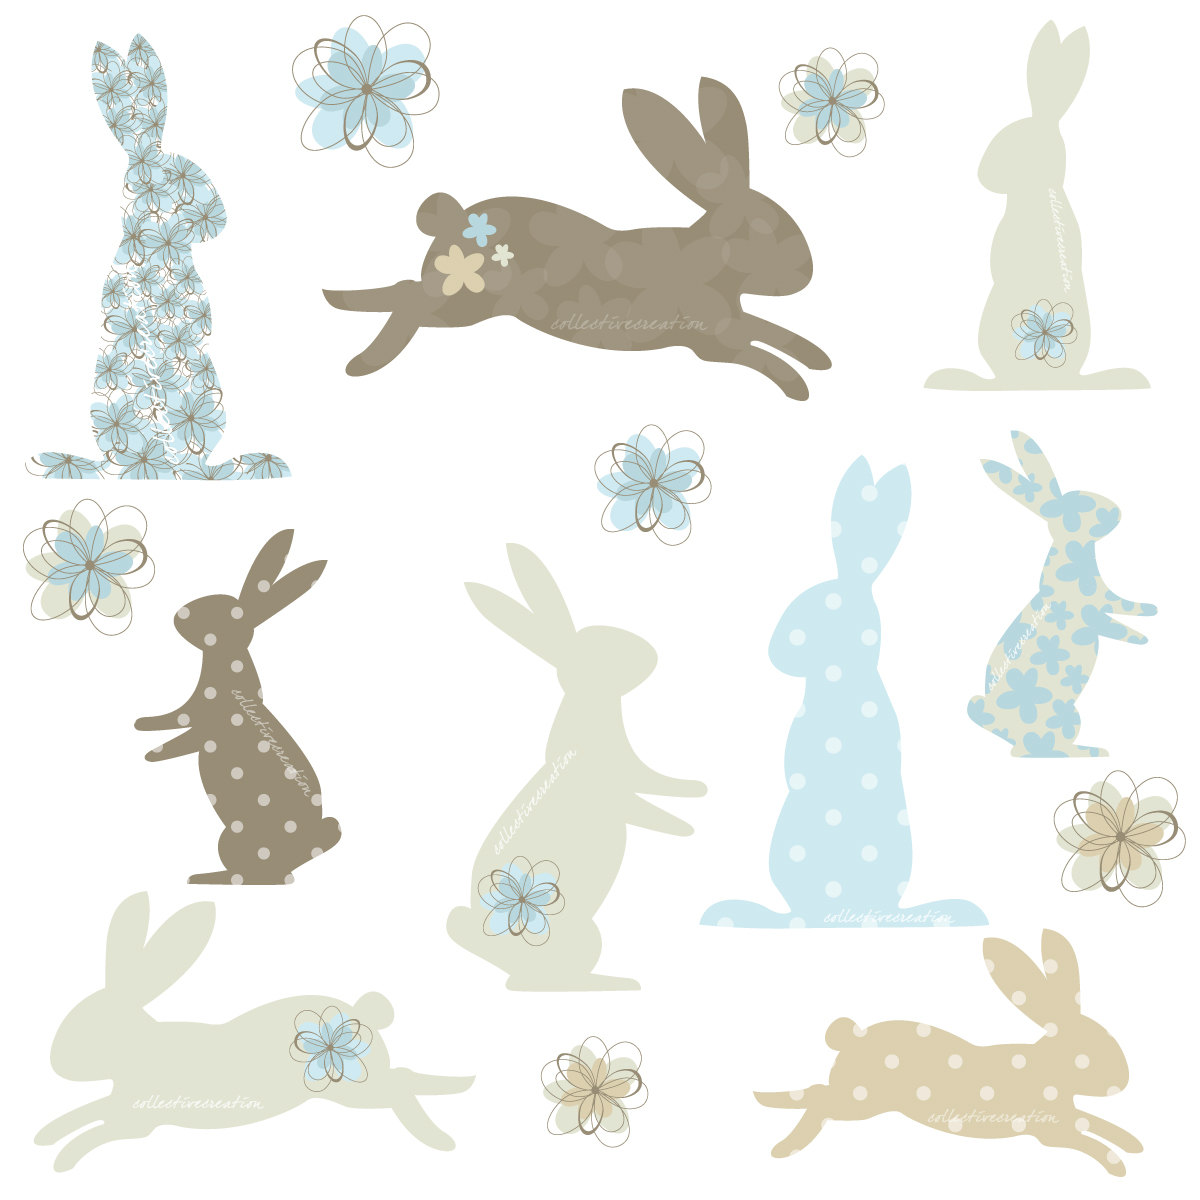 Popular items for rabbit silhouette 